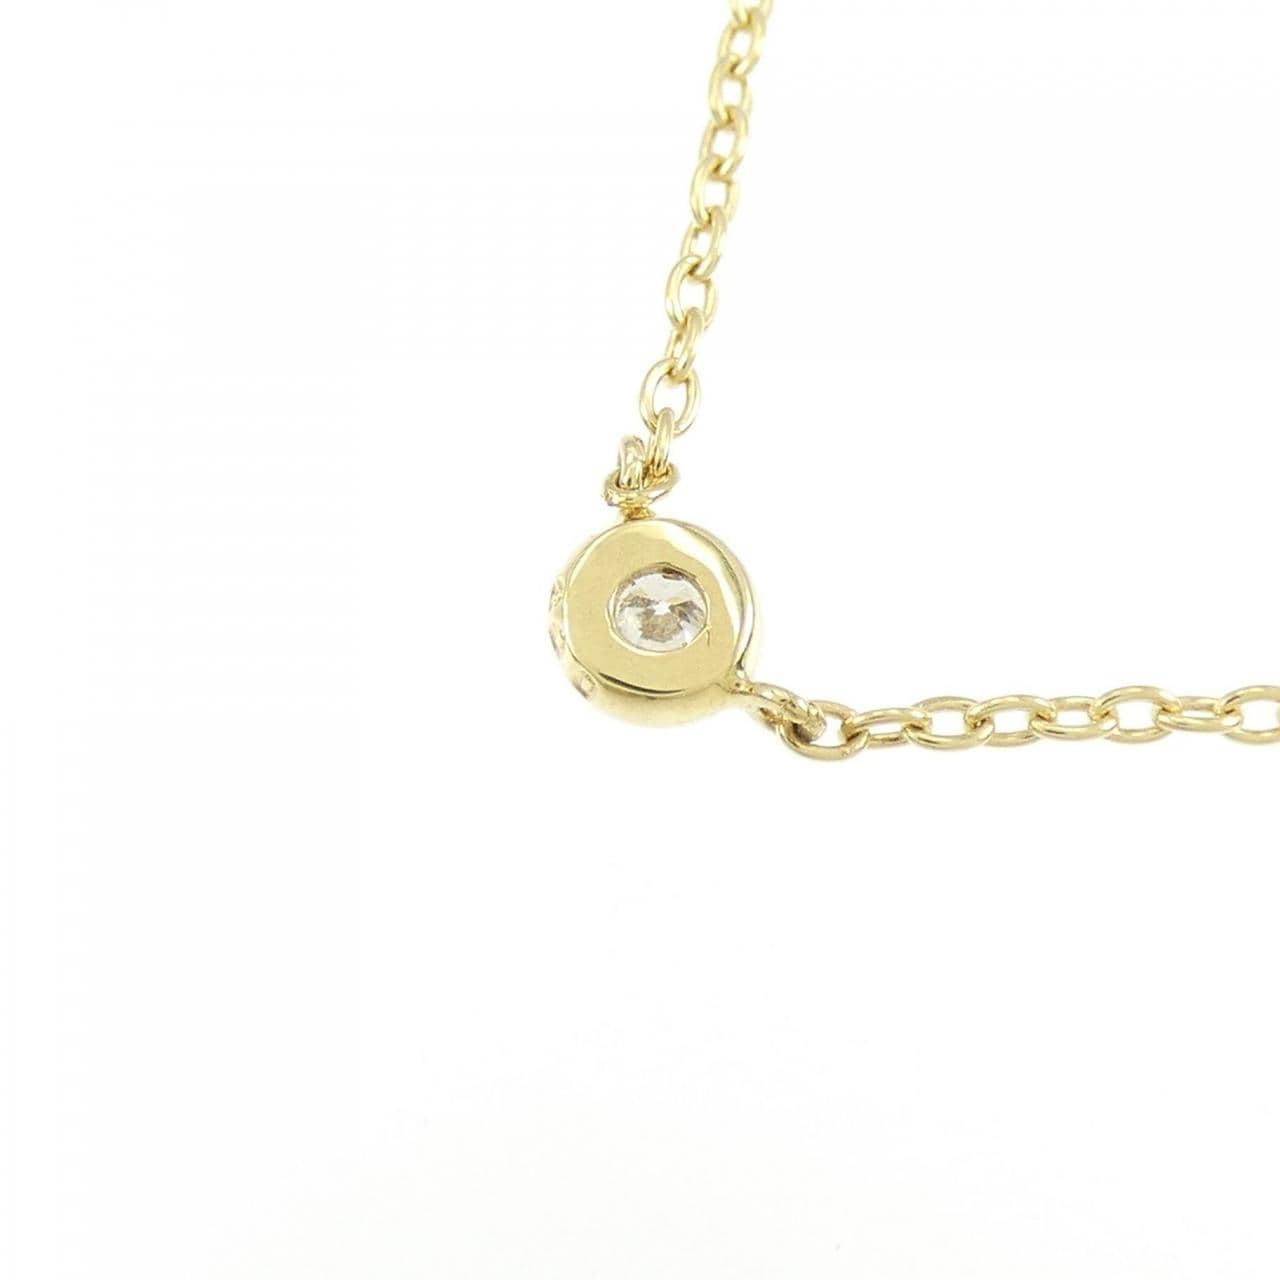 K18YG Solitaire Diamond Necklace 0.03CT